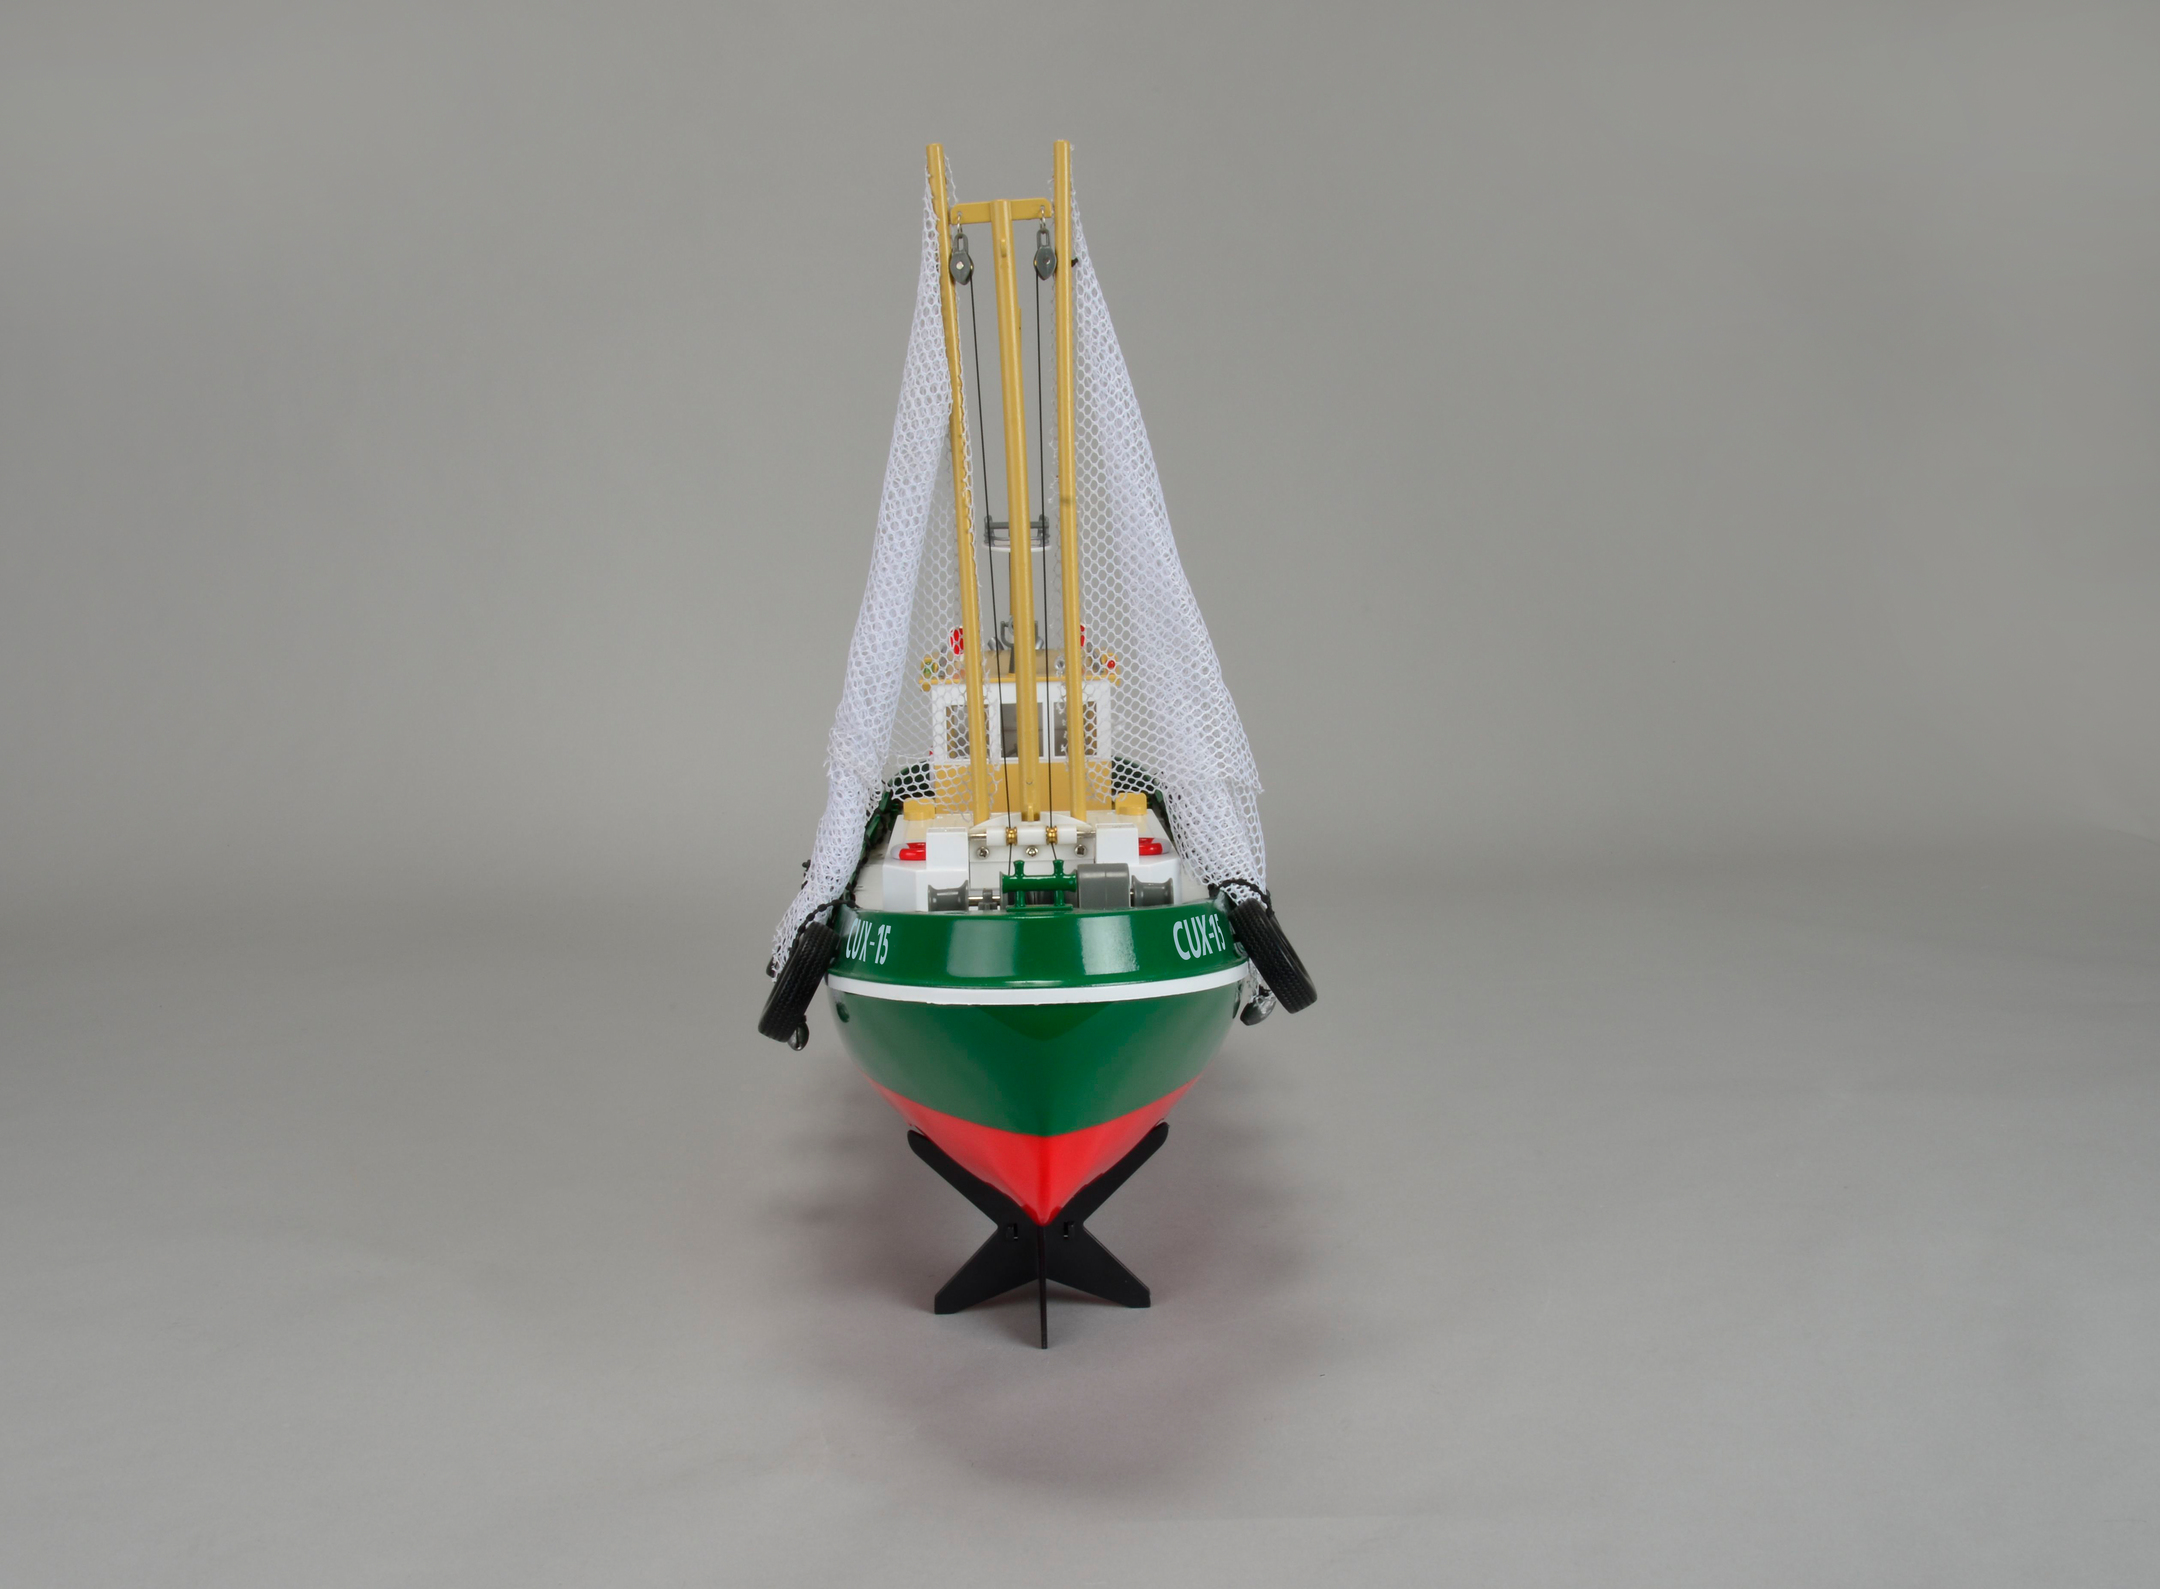 CARSON Grün RTR 100% Spielzeugboot, RC-Fischkutter Cux-15 2.4G